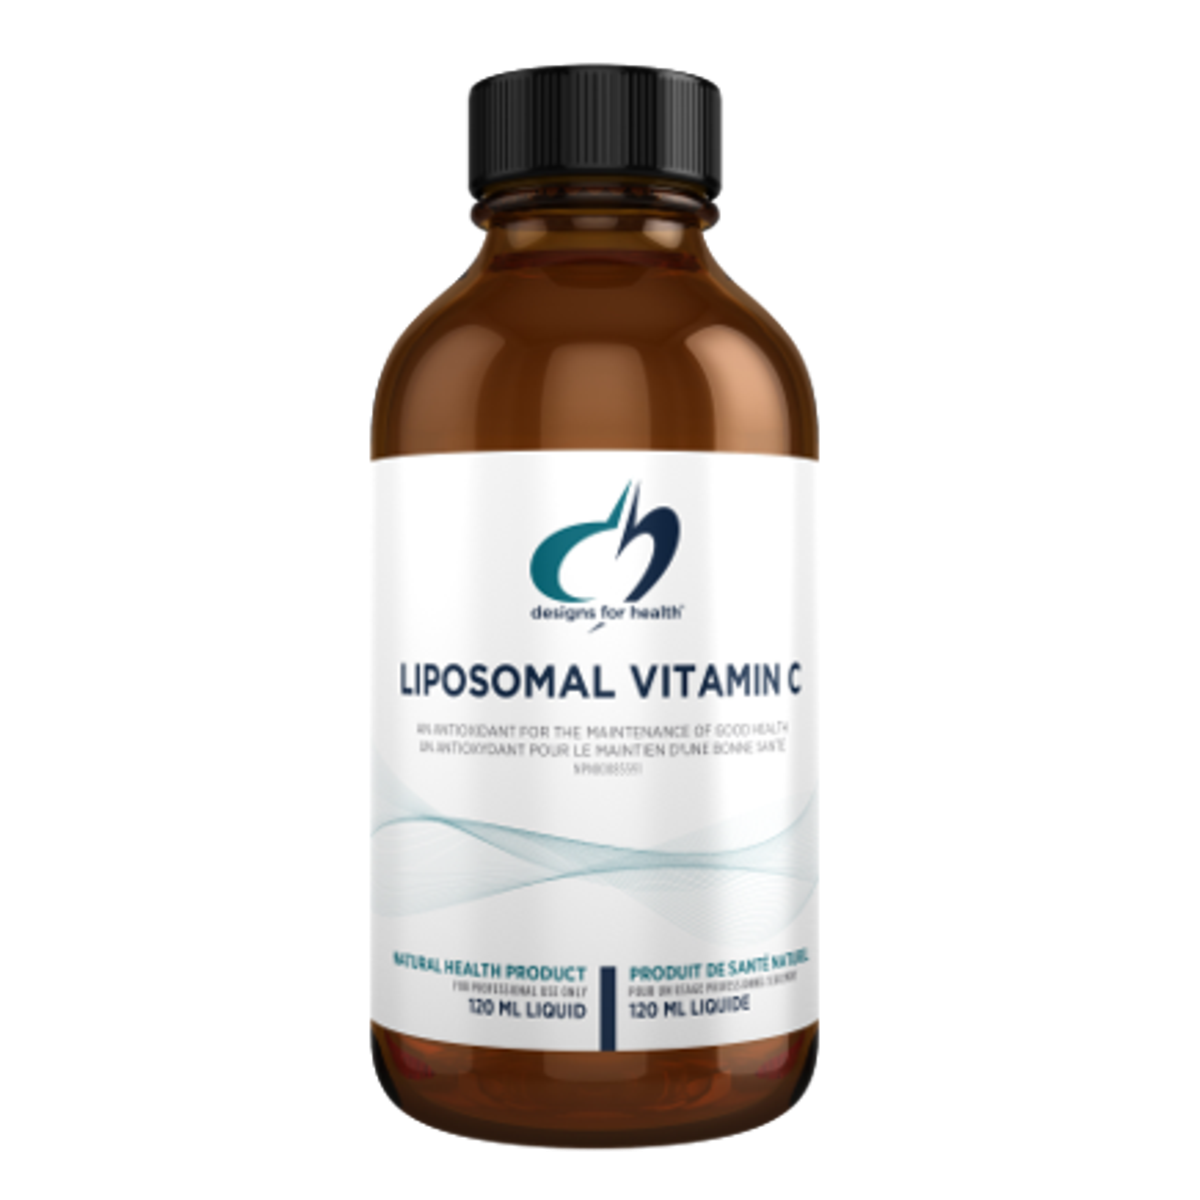 Liposomal Vitamin C, 120 mL - iwellnessbox